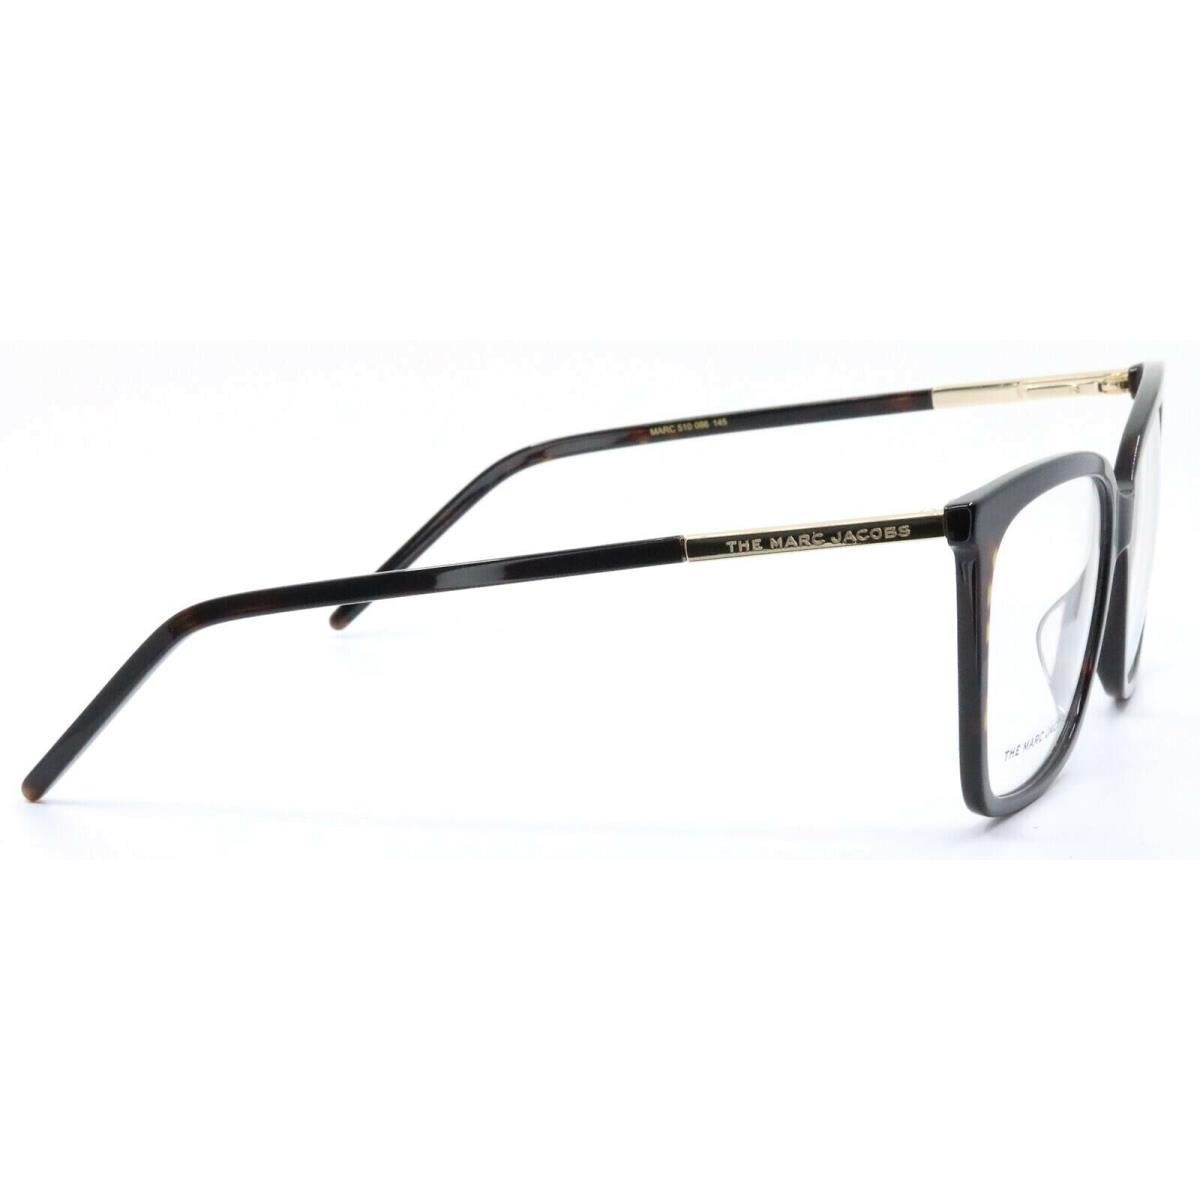 Marc Jacobs eyeglasses  - Brown Frame 2